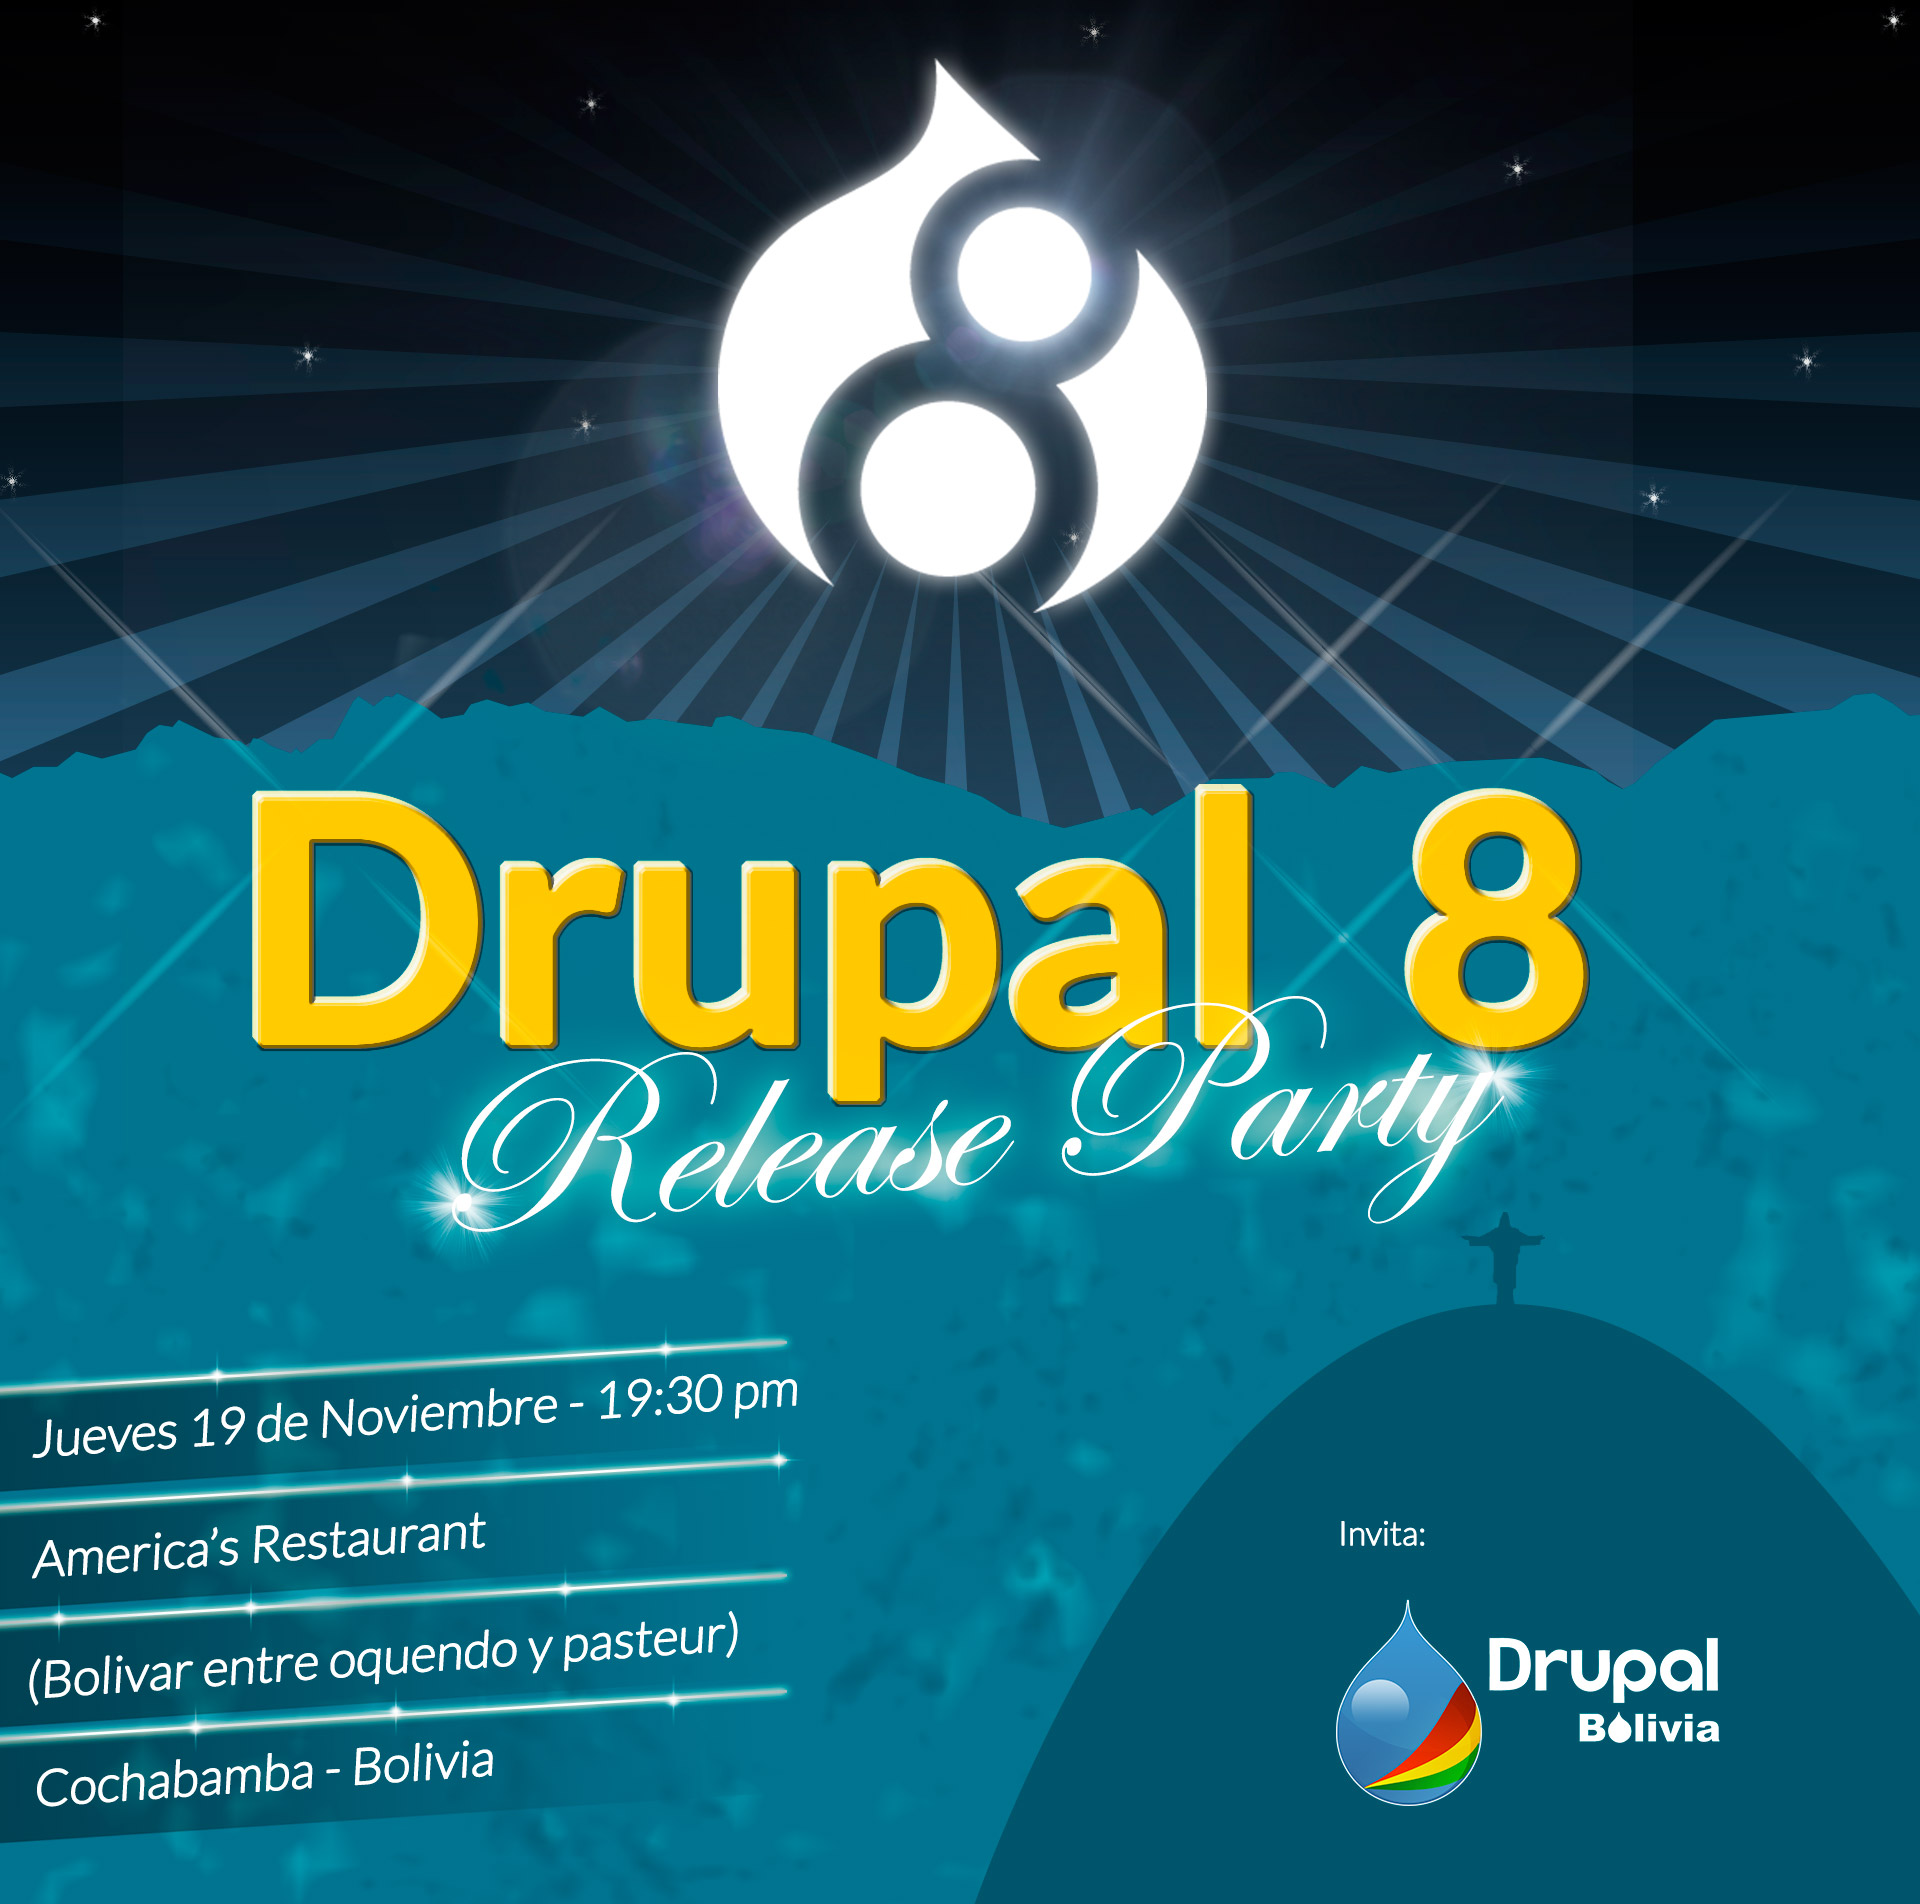 Drupal 8 Release Party